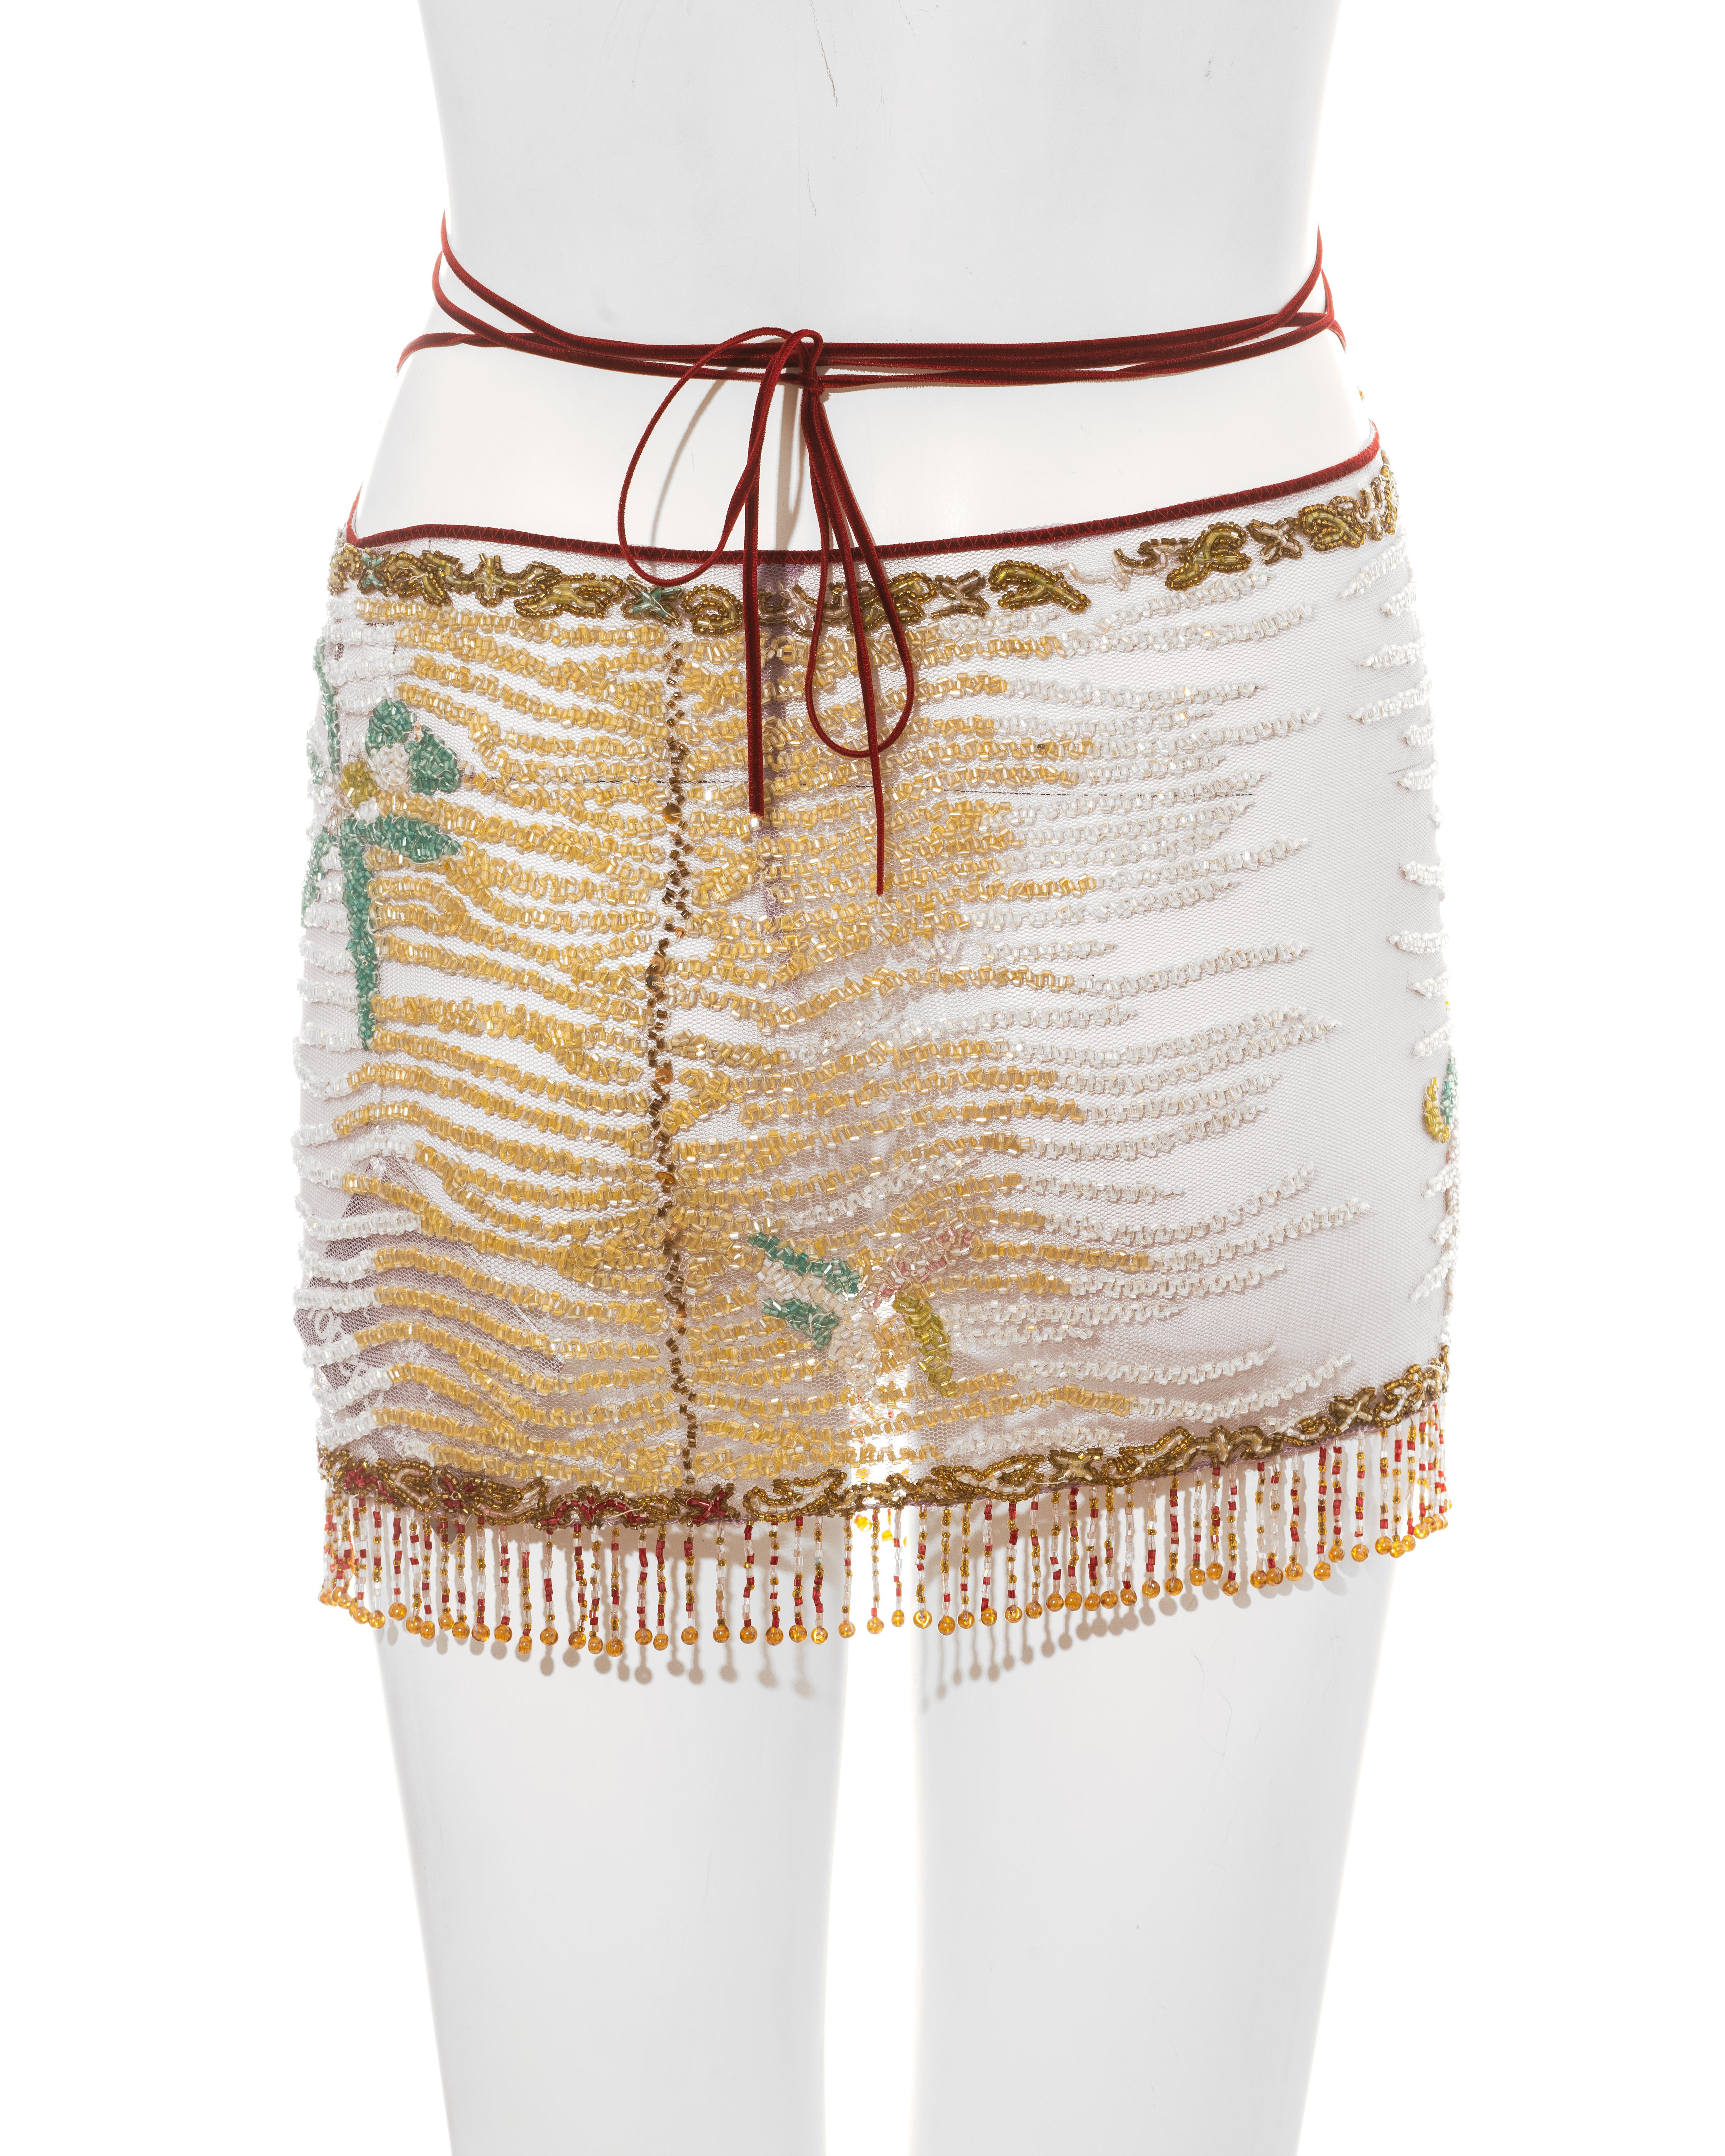 Roberto Cavalli beaded embellished fringed evening wrap mini skirt, ss 2000 1